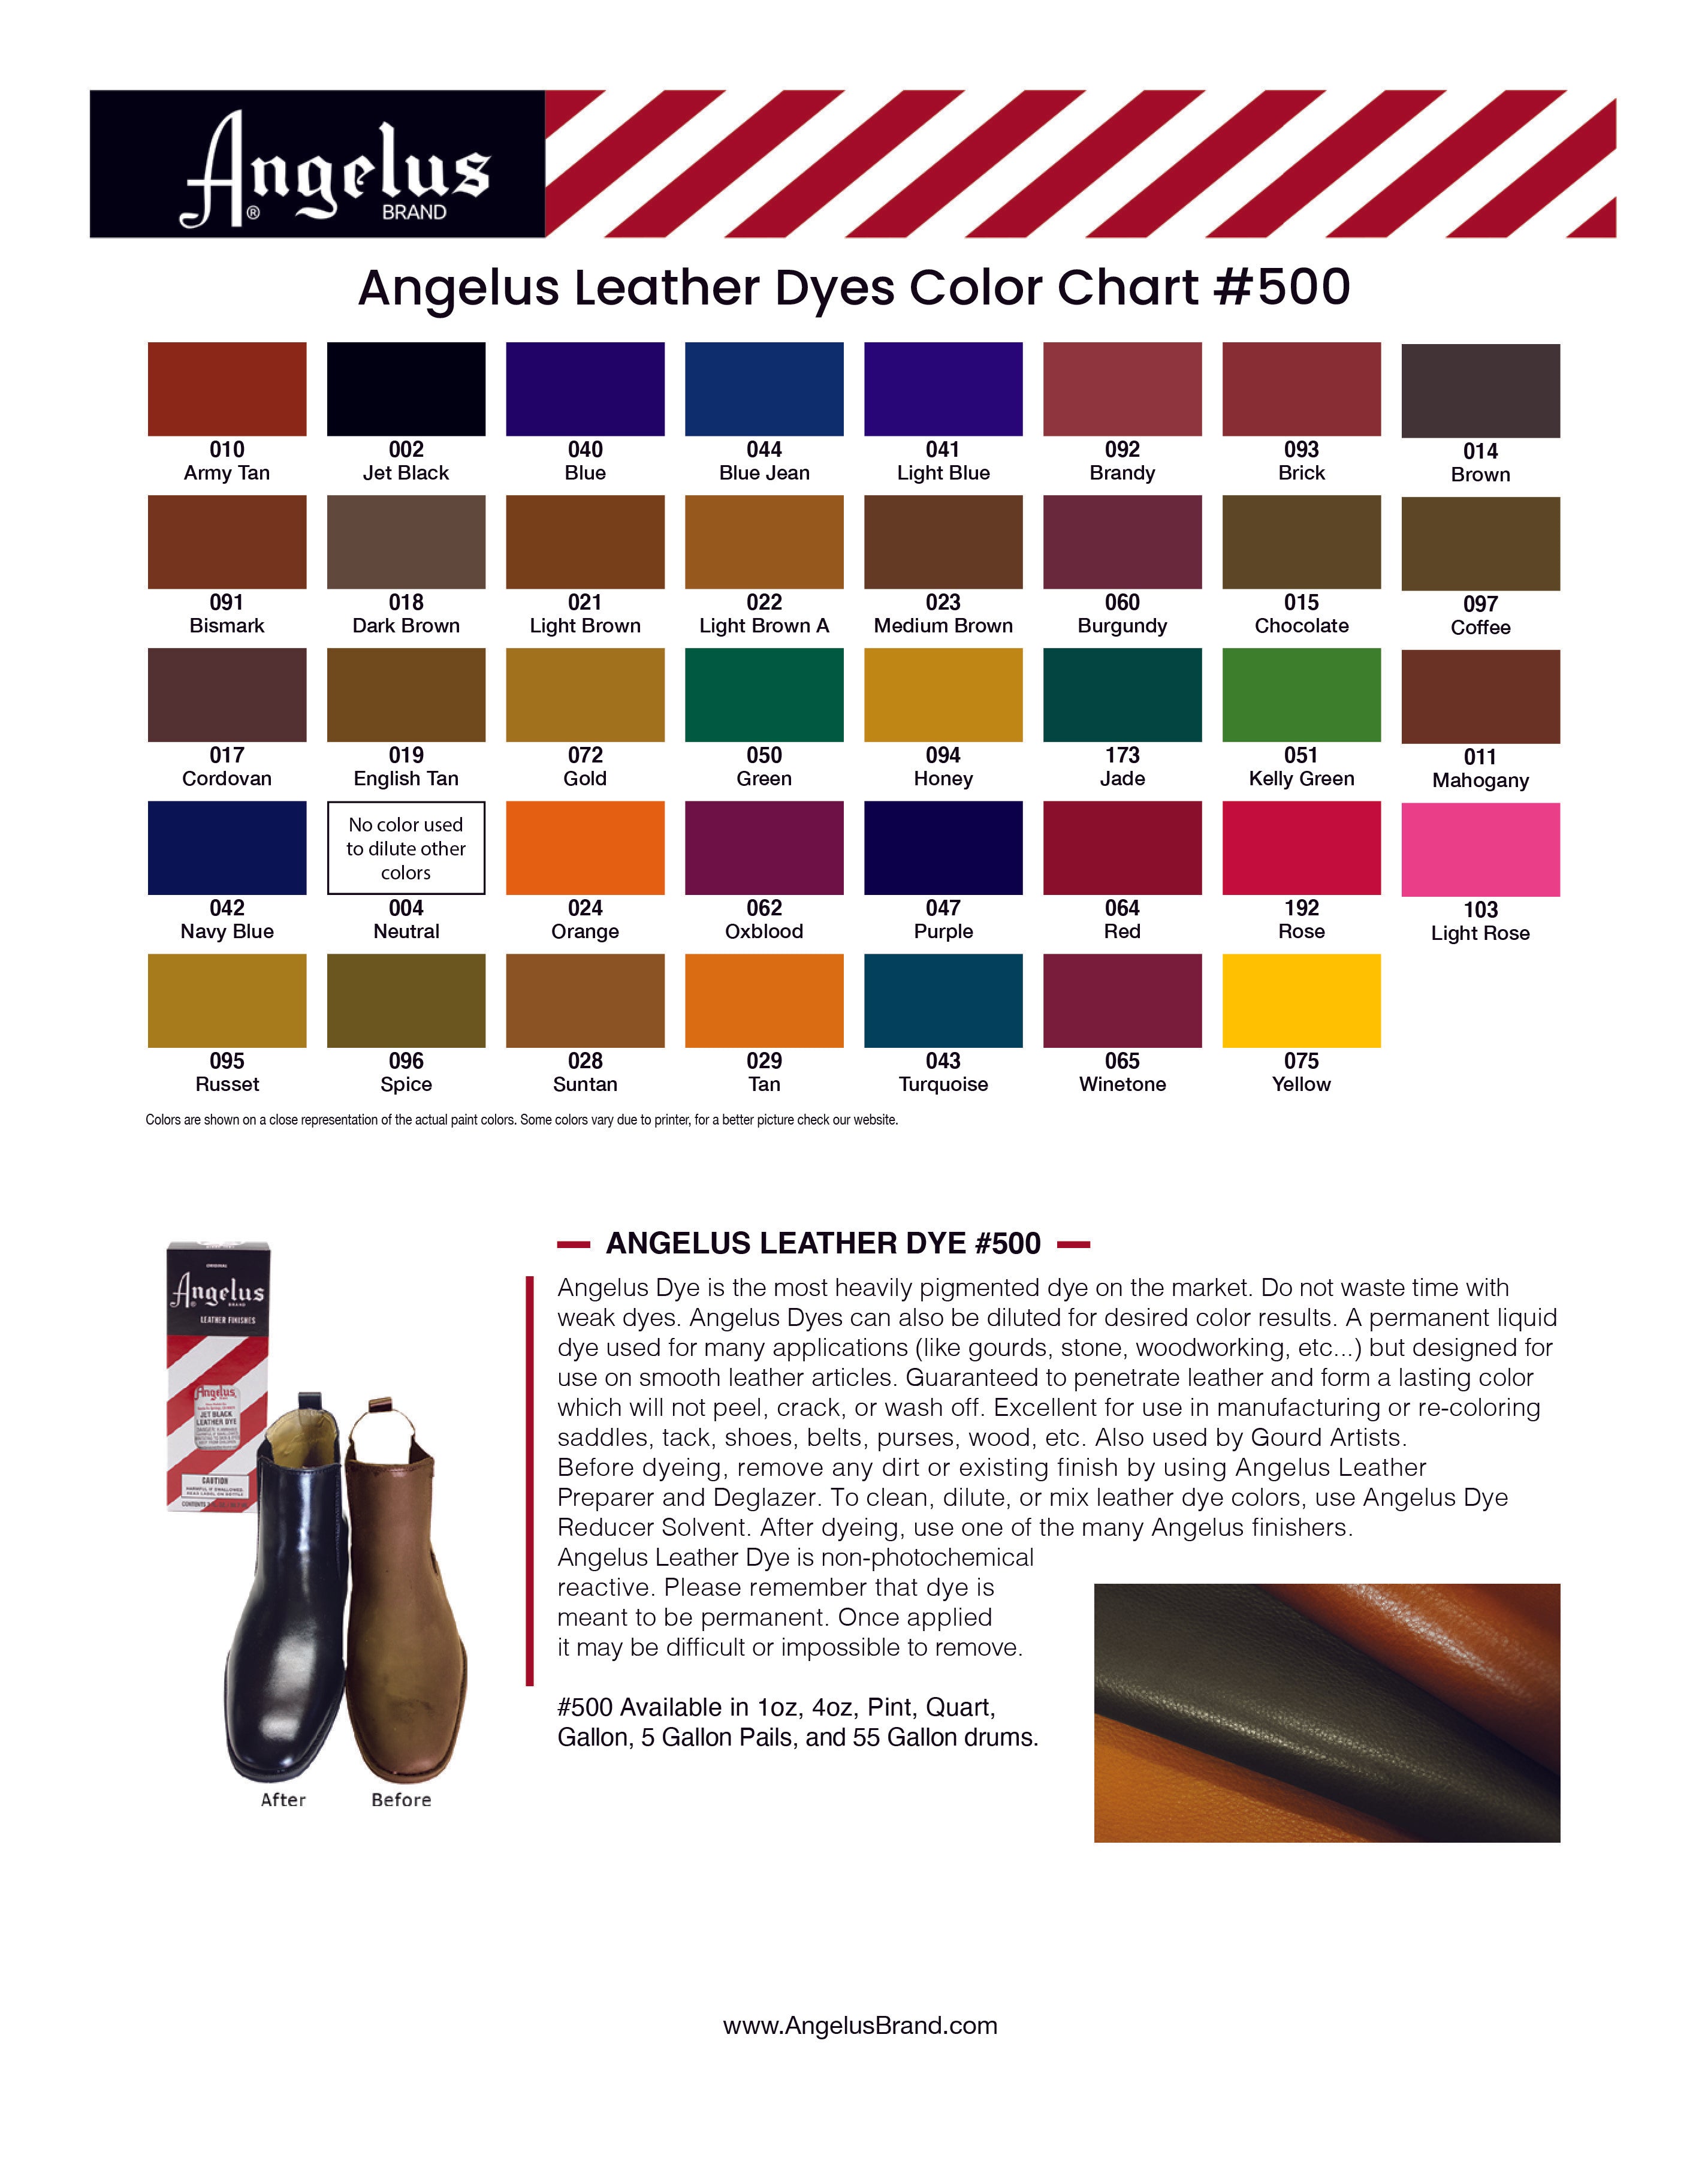 Angelus Leather Dye 3 oz - Light Brown